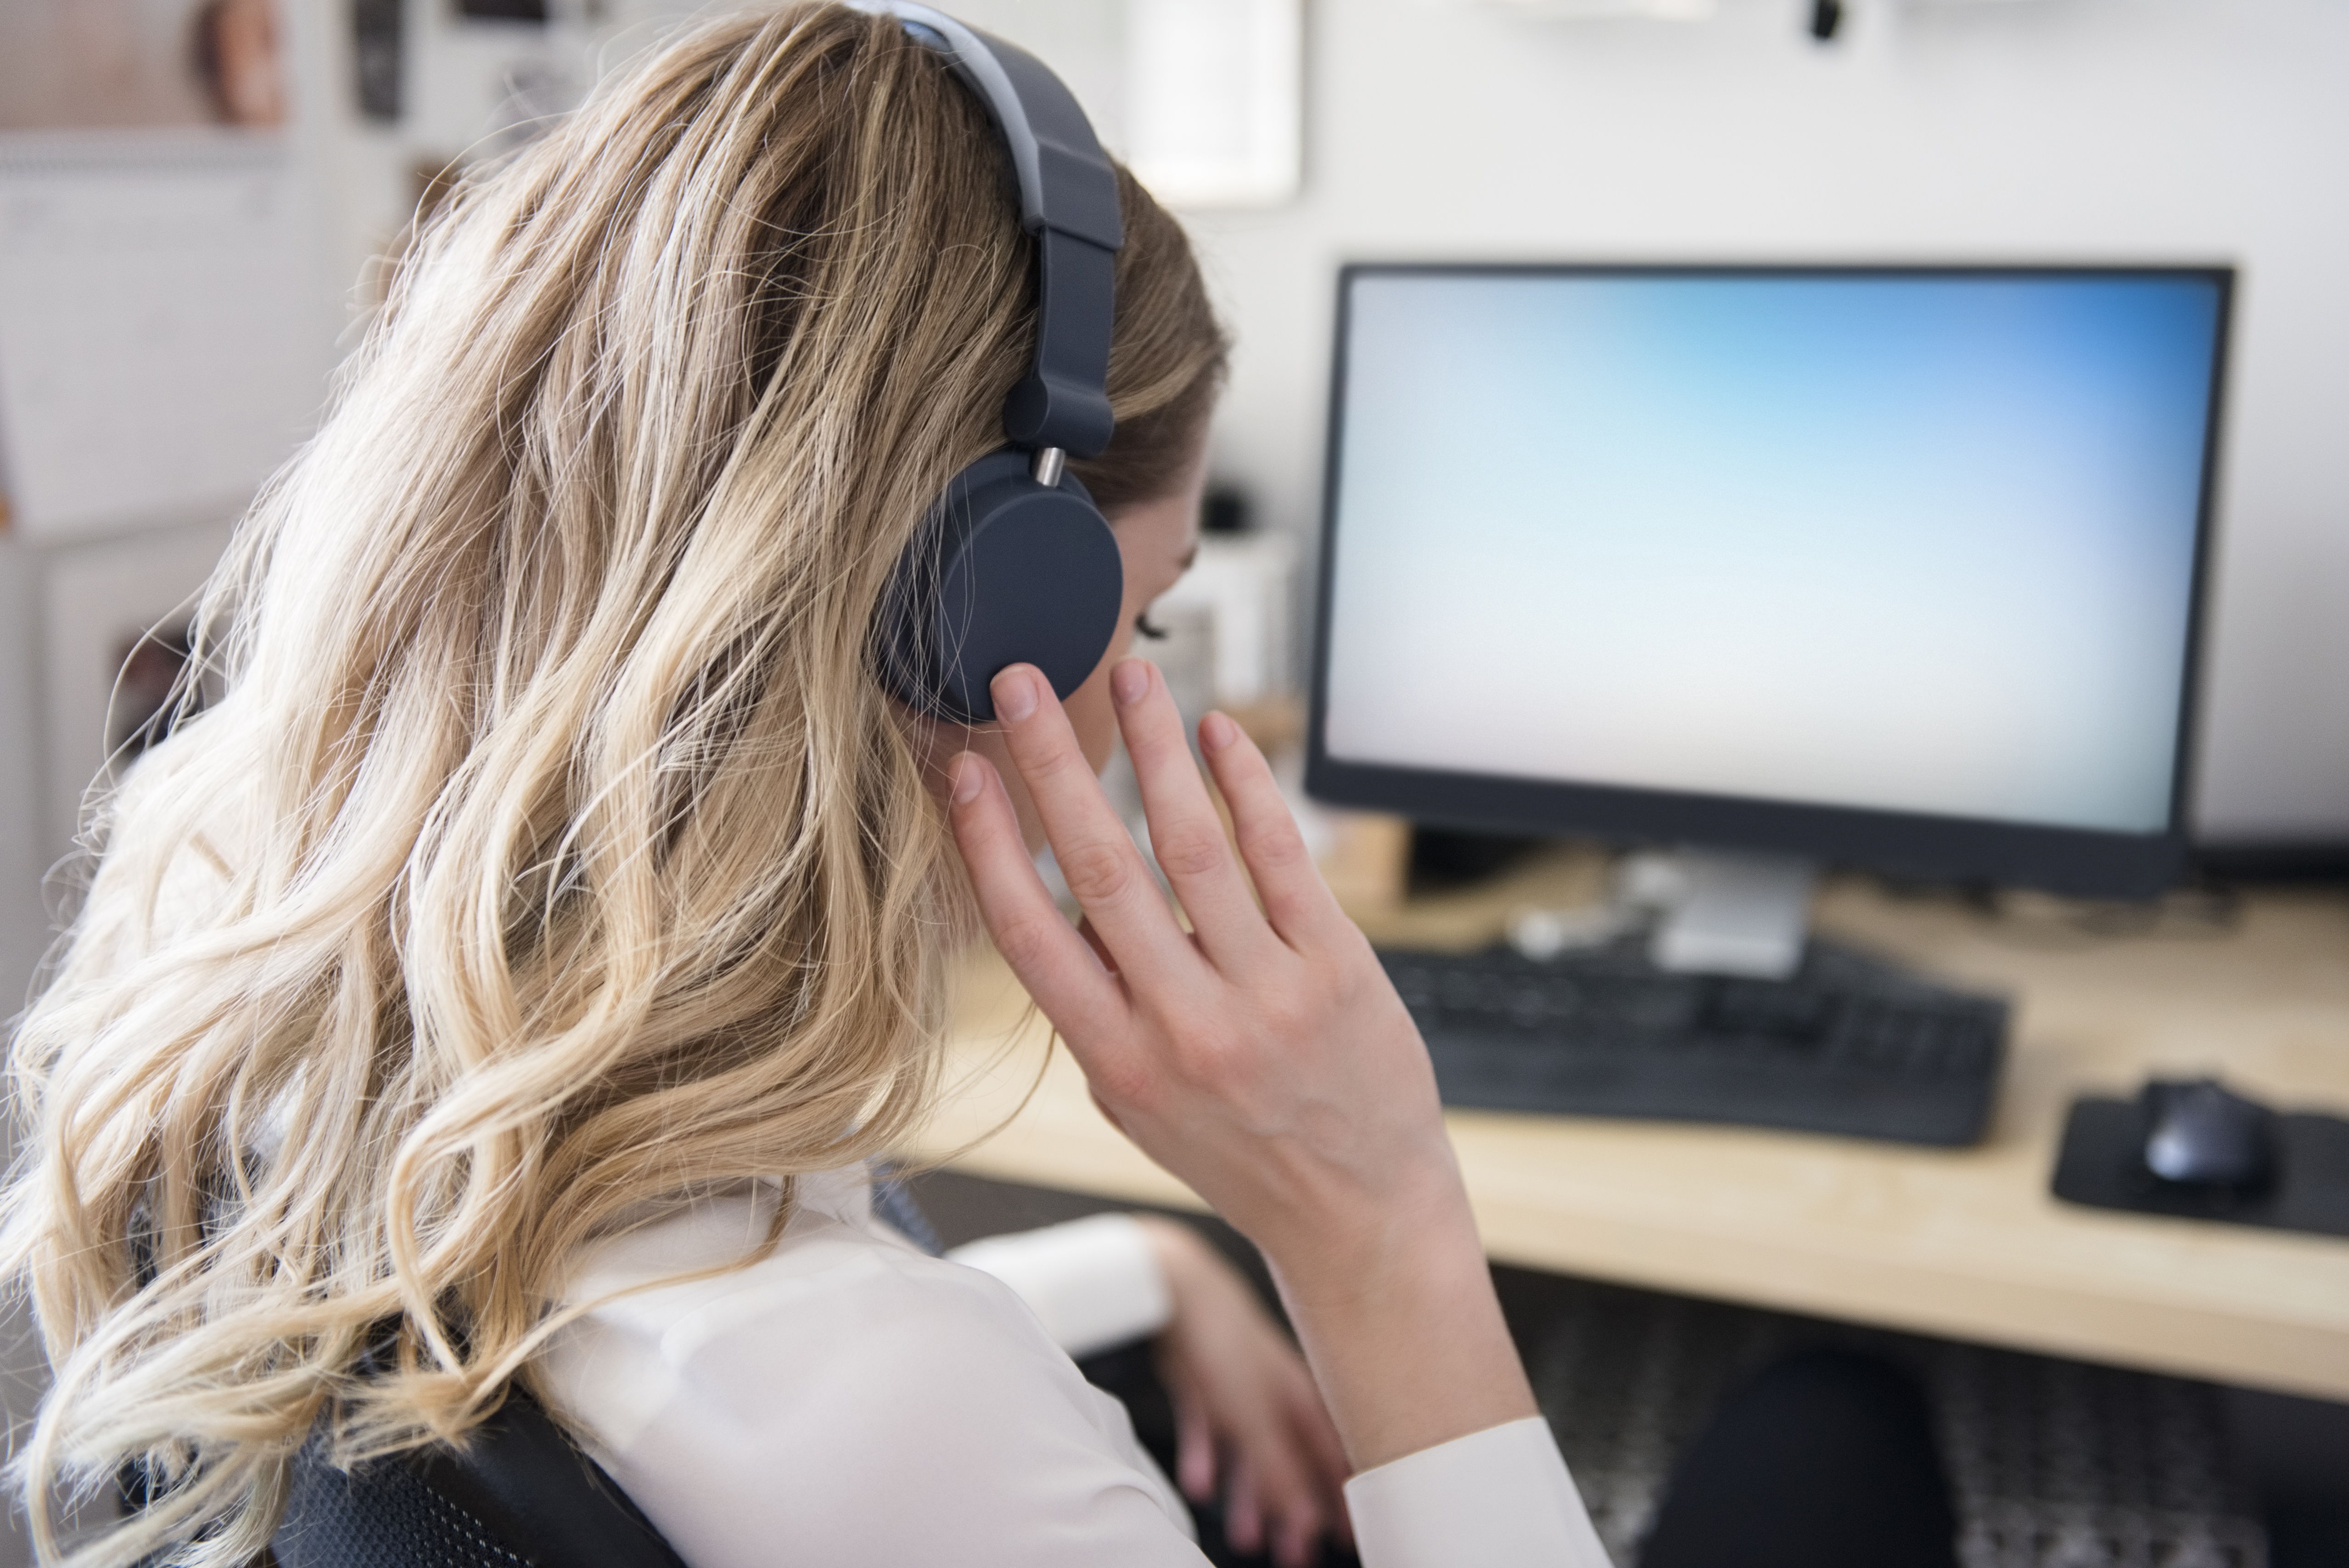 Caucasian woman listening to headphones at computer desk